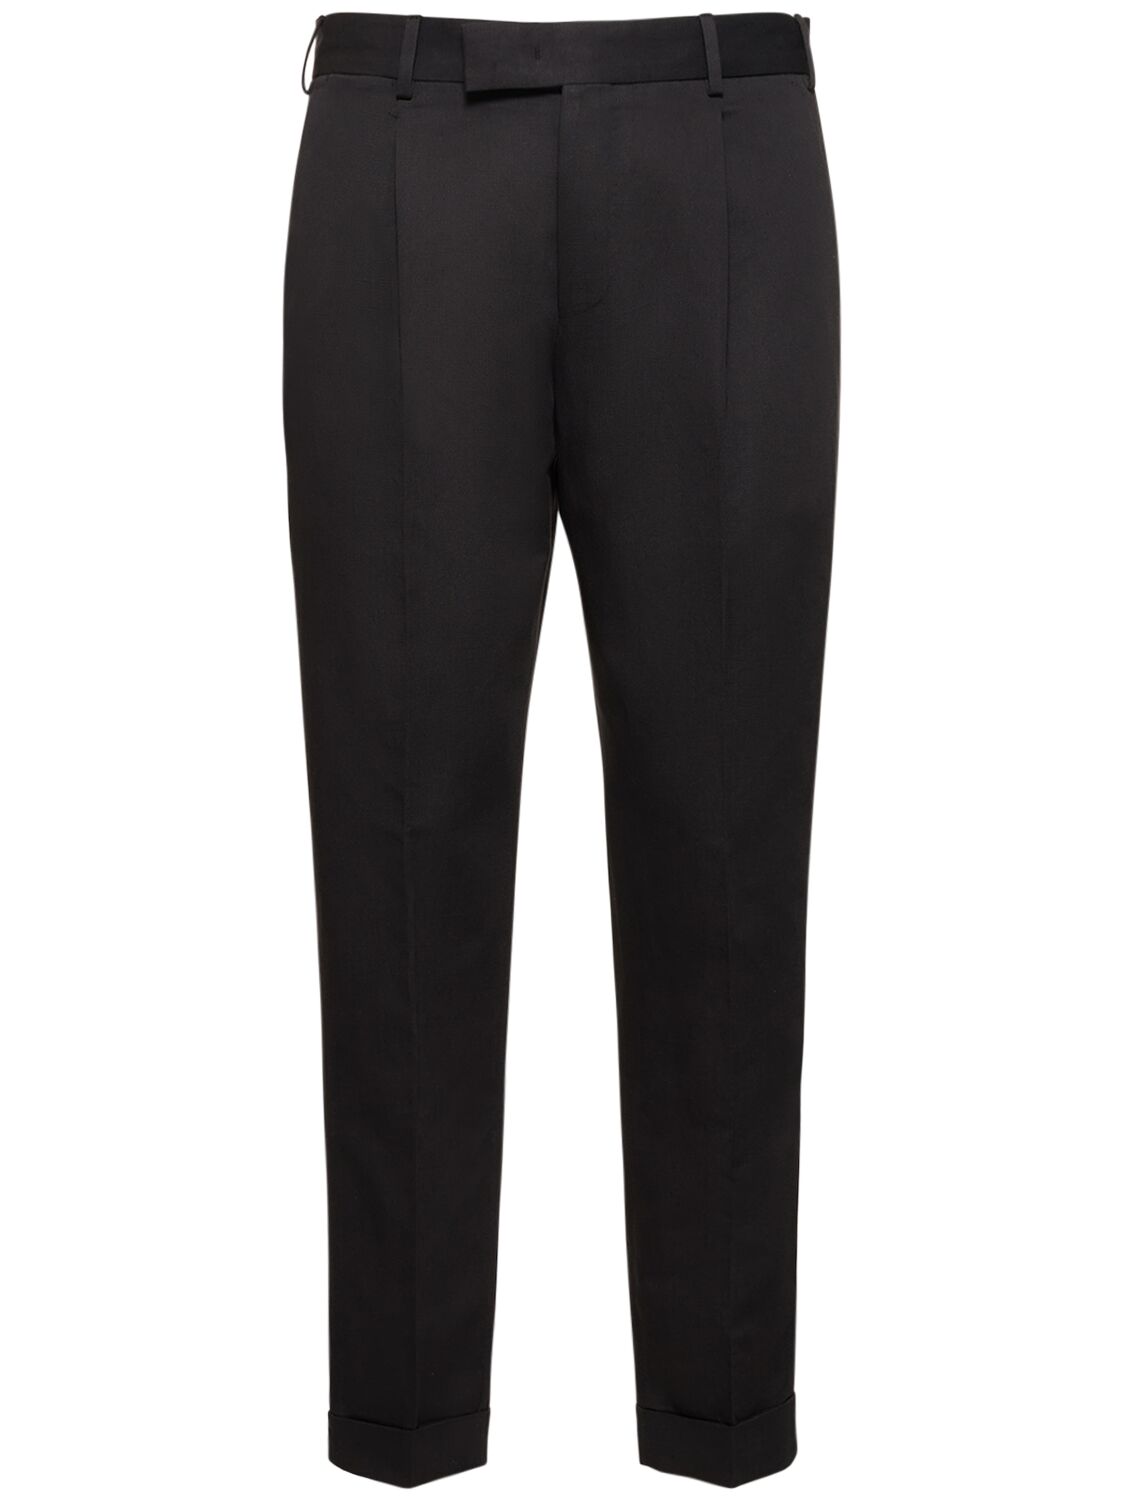 Shop Pt Torino Rebel Cotton & Linen Pants In Black